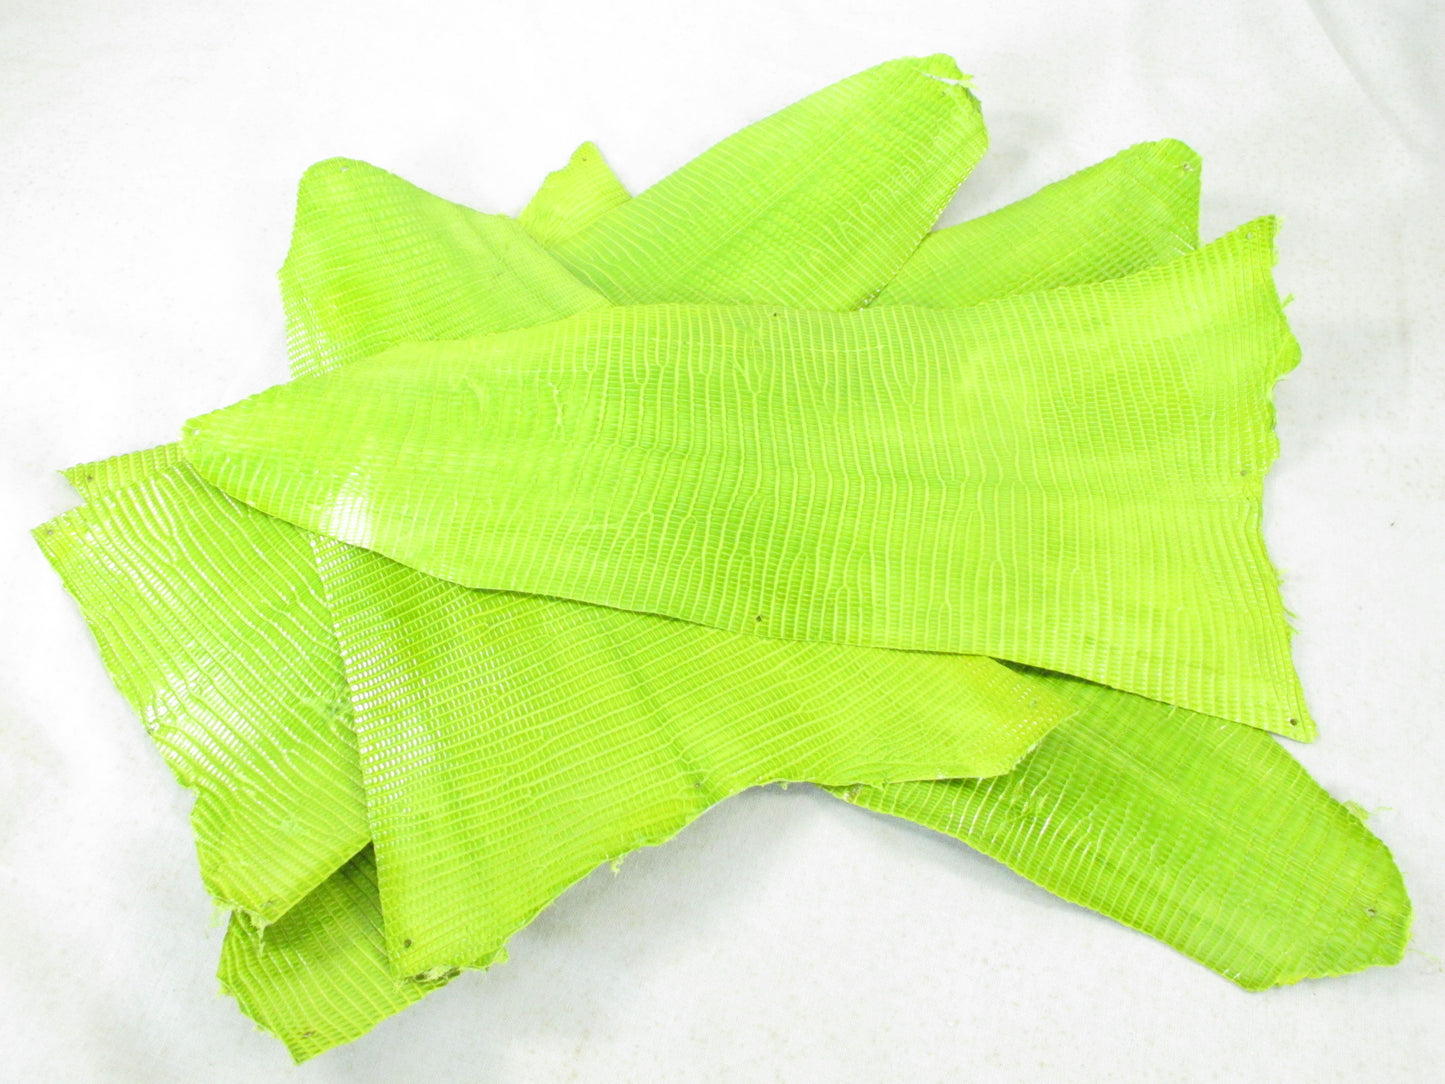 Genuine Lizard Skin Leather Scraps Hide Pelt 100 grams